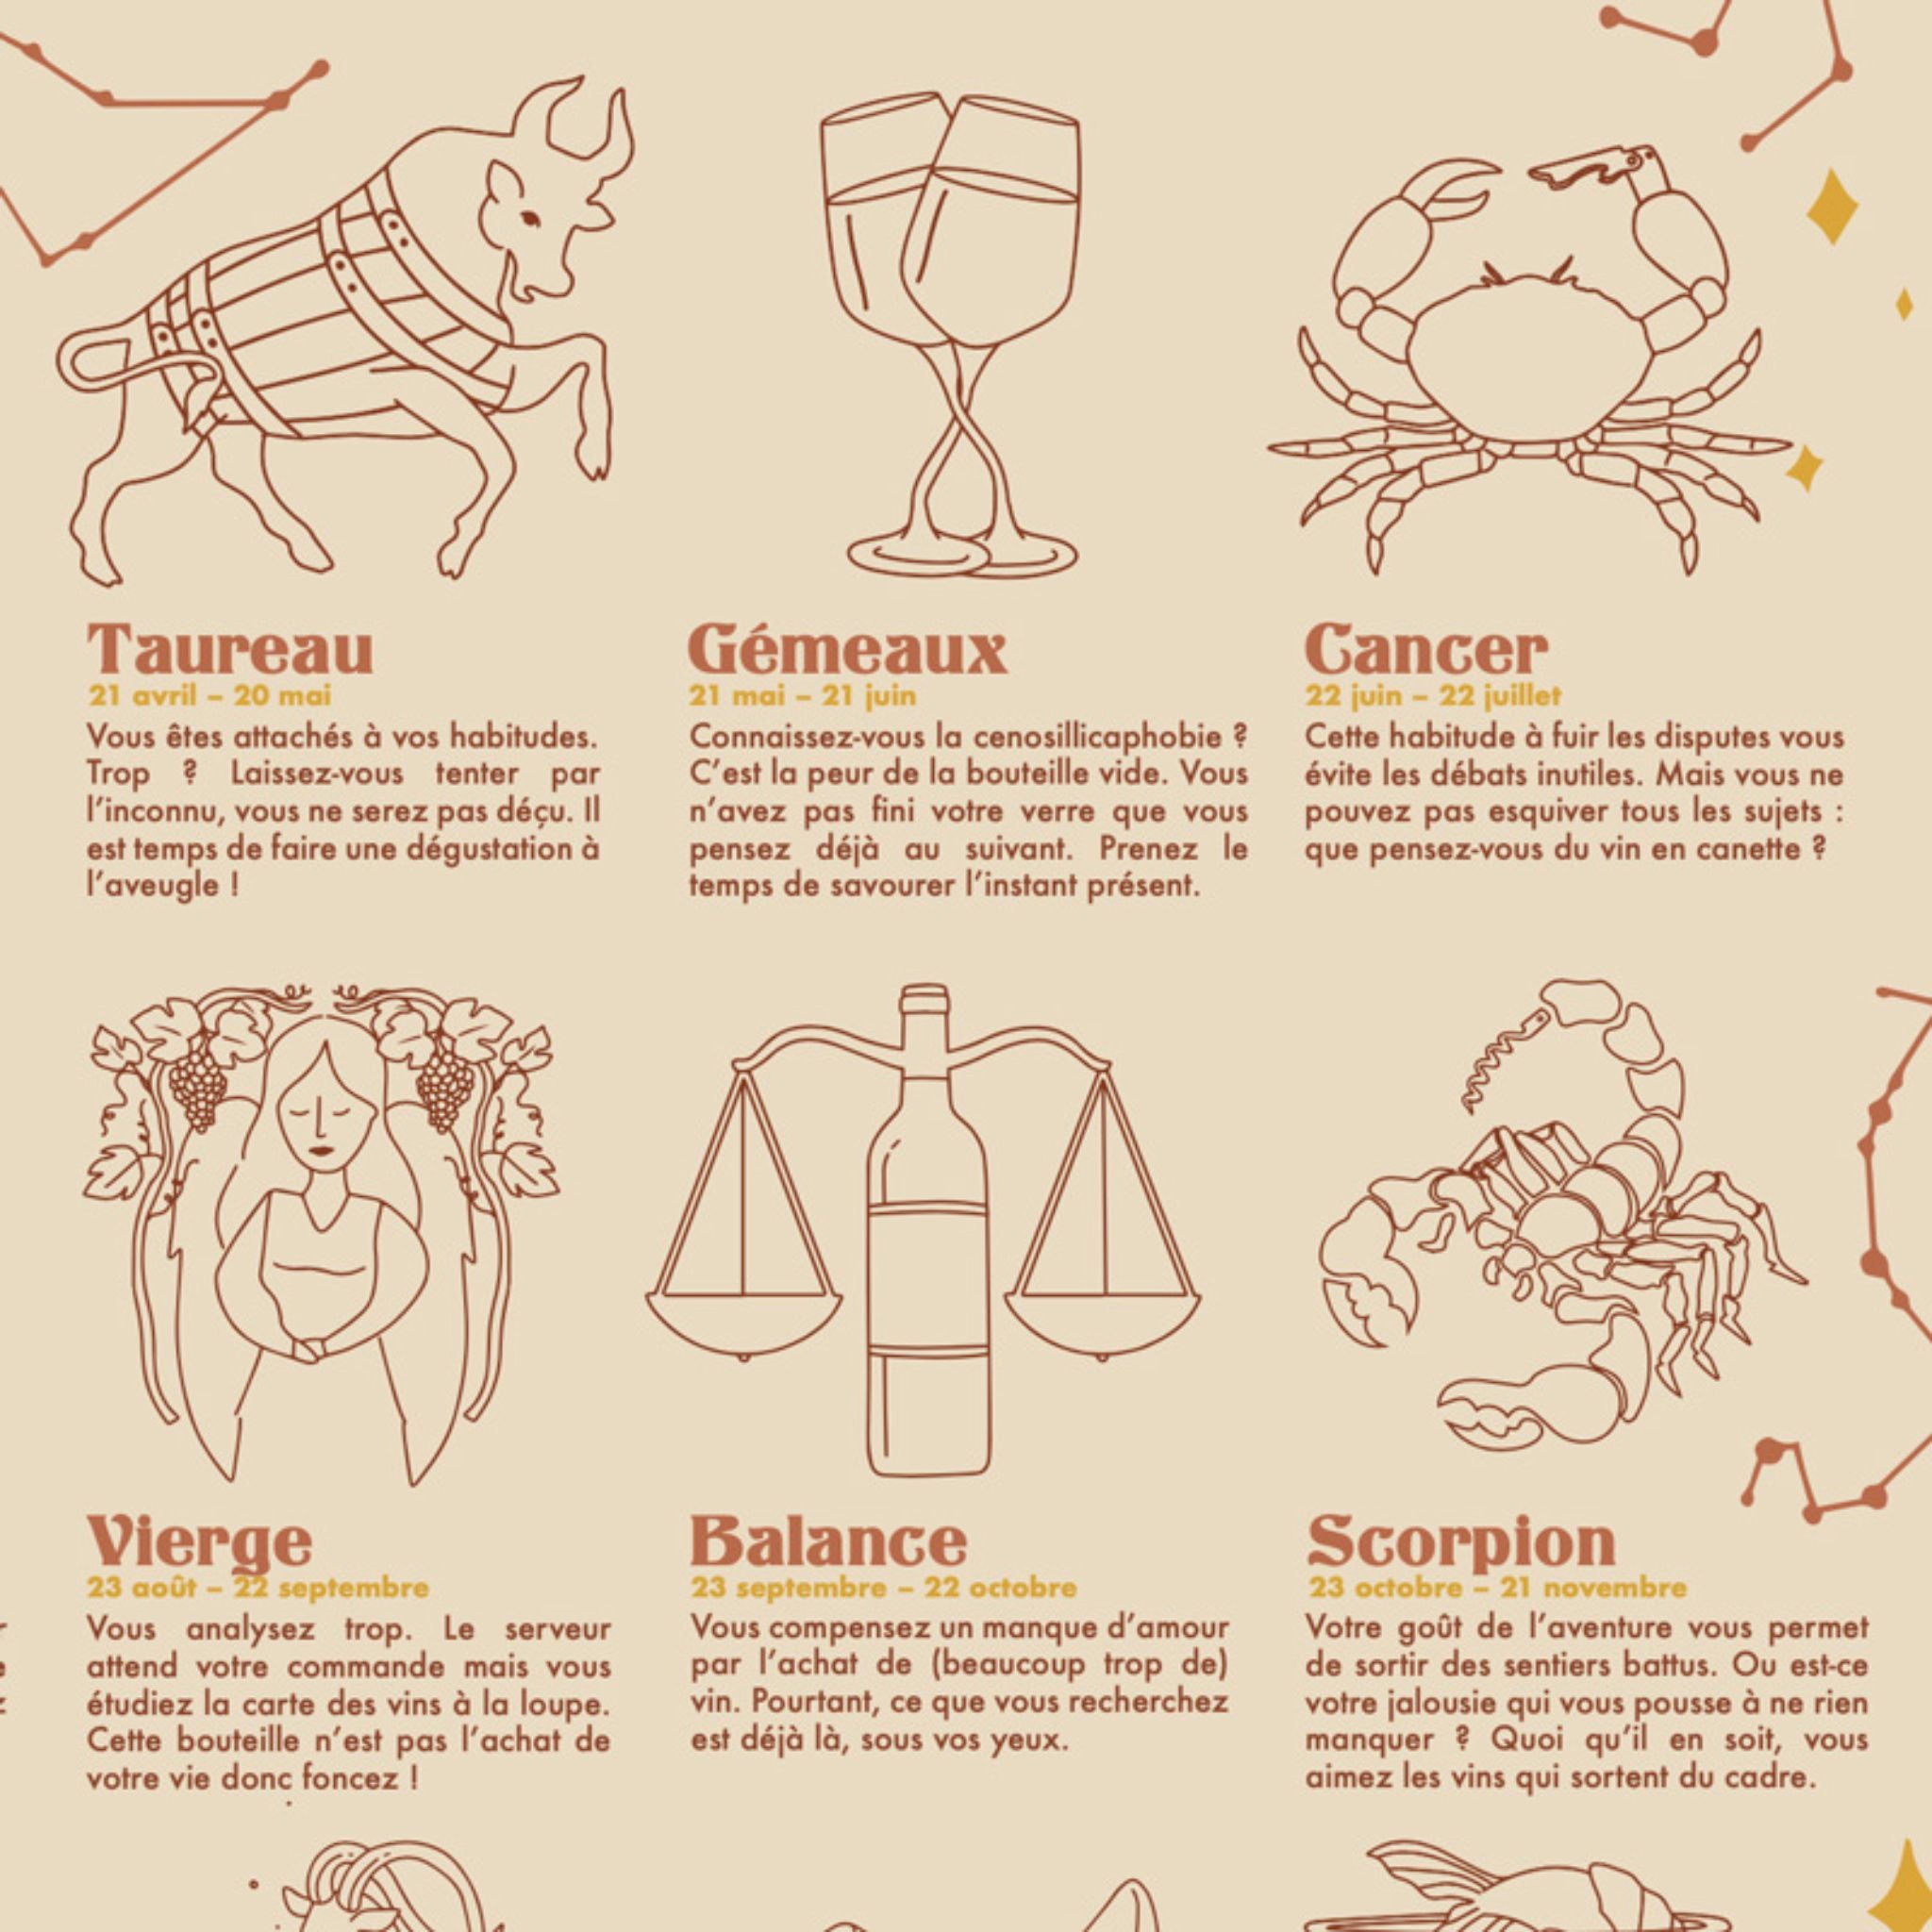 "L'horoscope à déguster" : affiche beige et terracotta